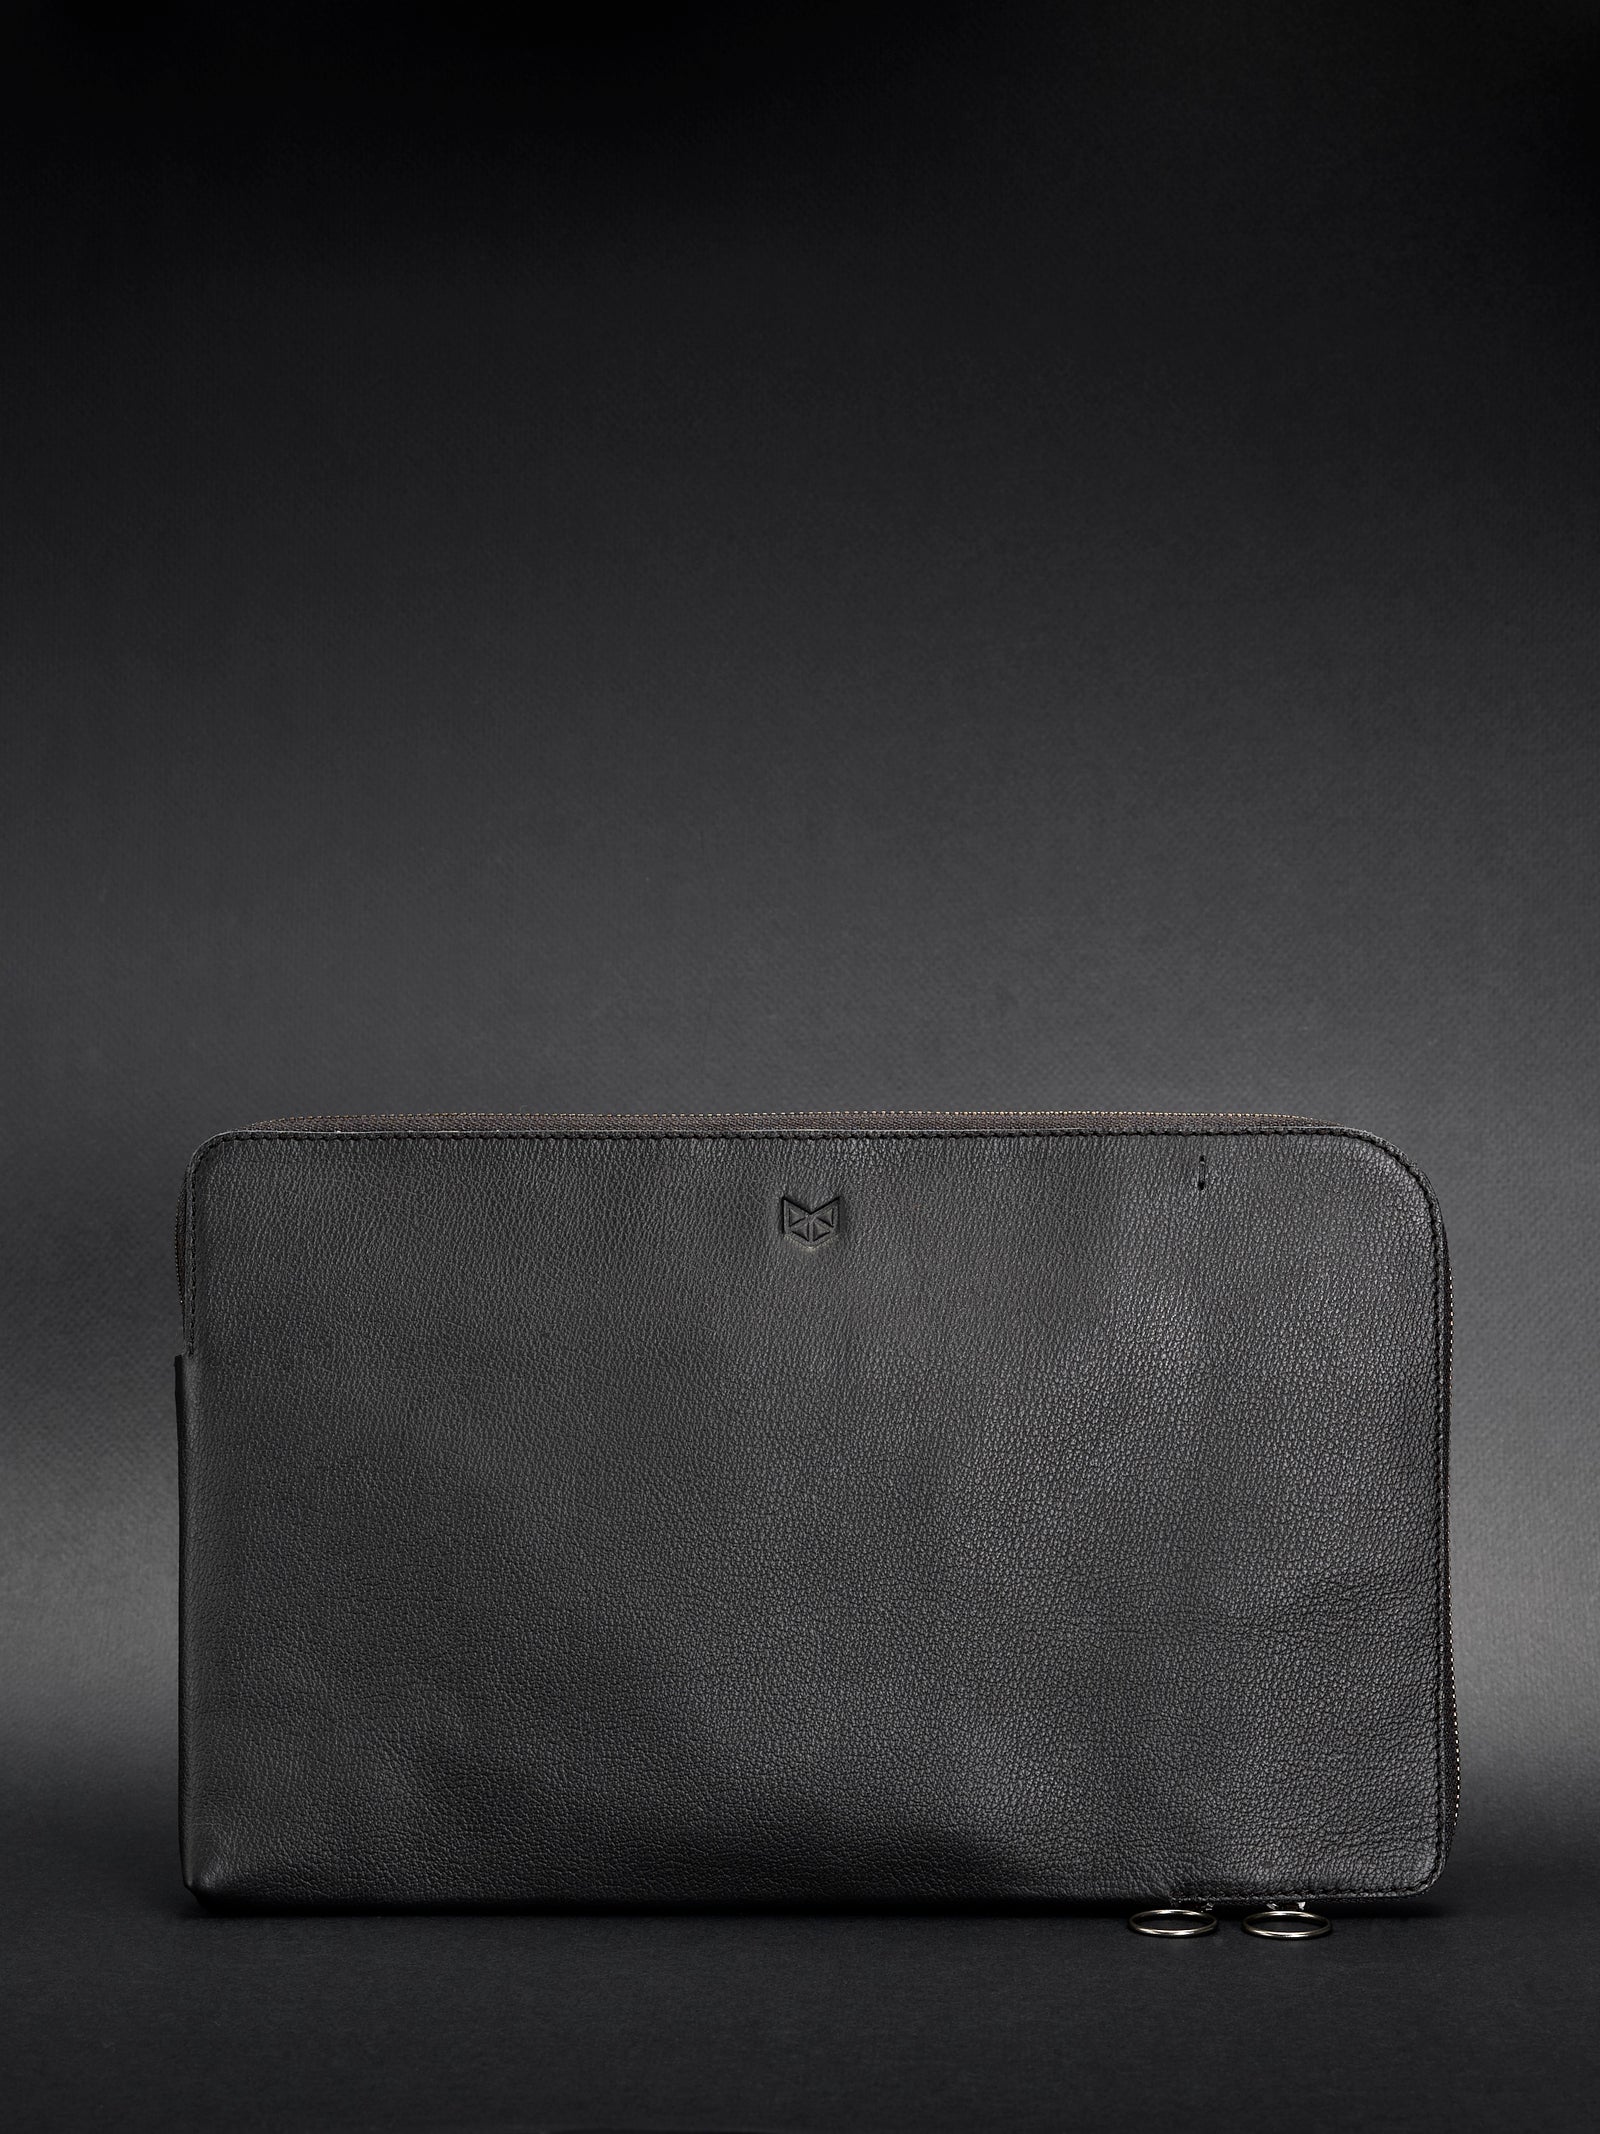 Handmade Apple iPad Sleeve Case by Capra Leather